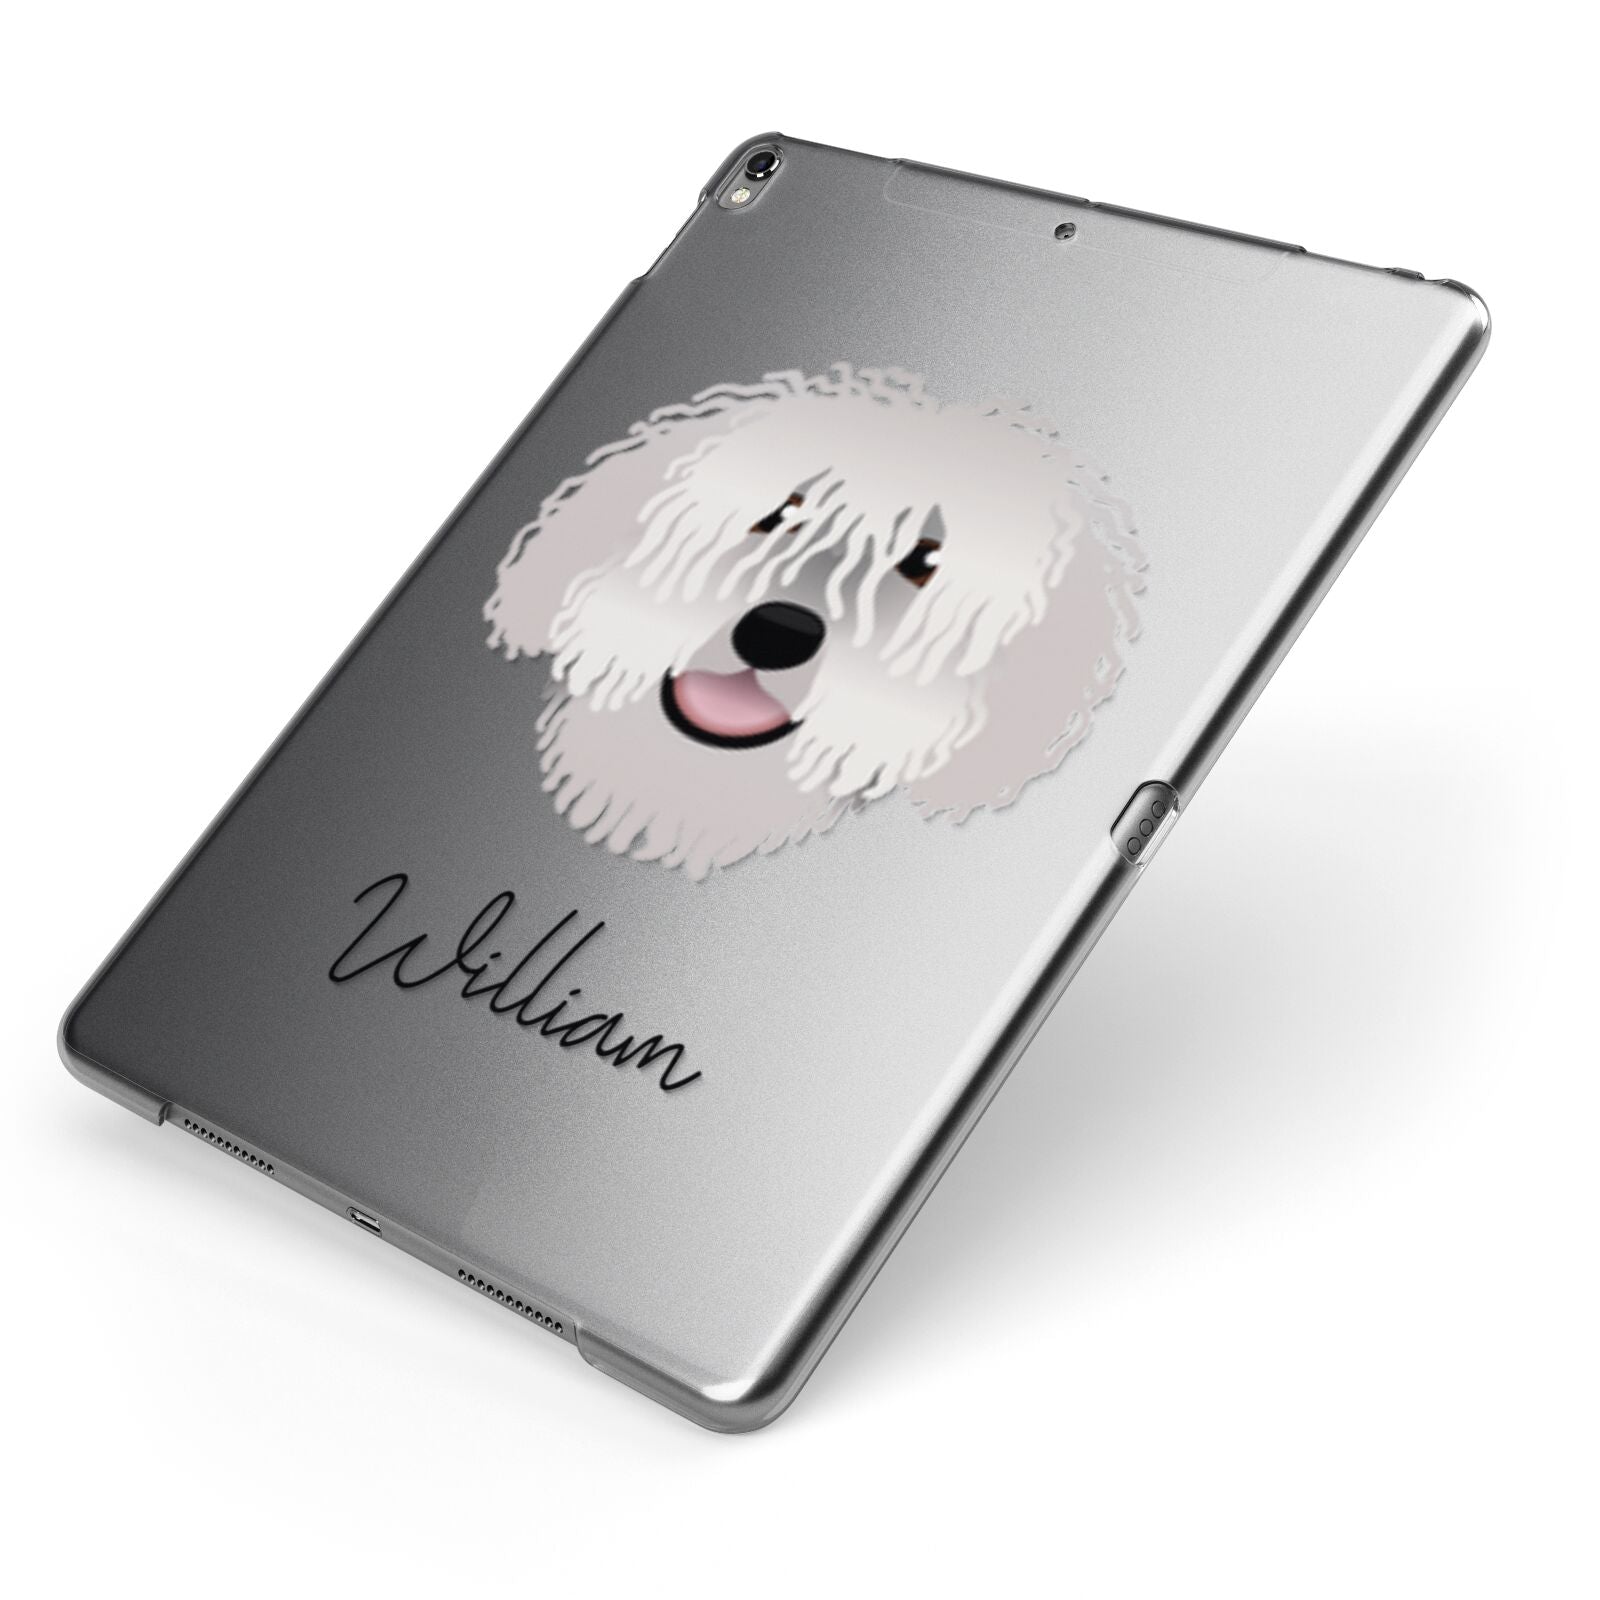 Spanish Water Dog Personalised Apple iPad Case on Grey iPad Side View